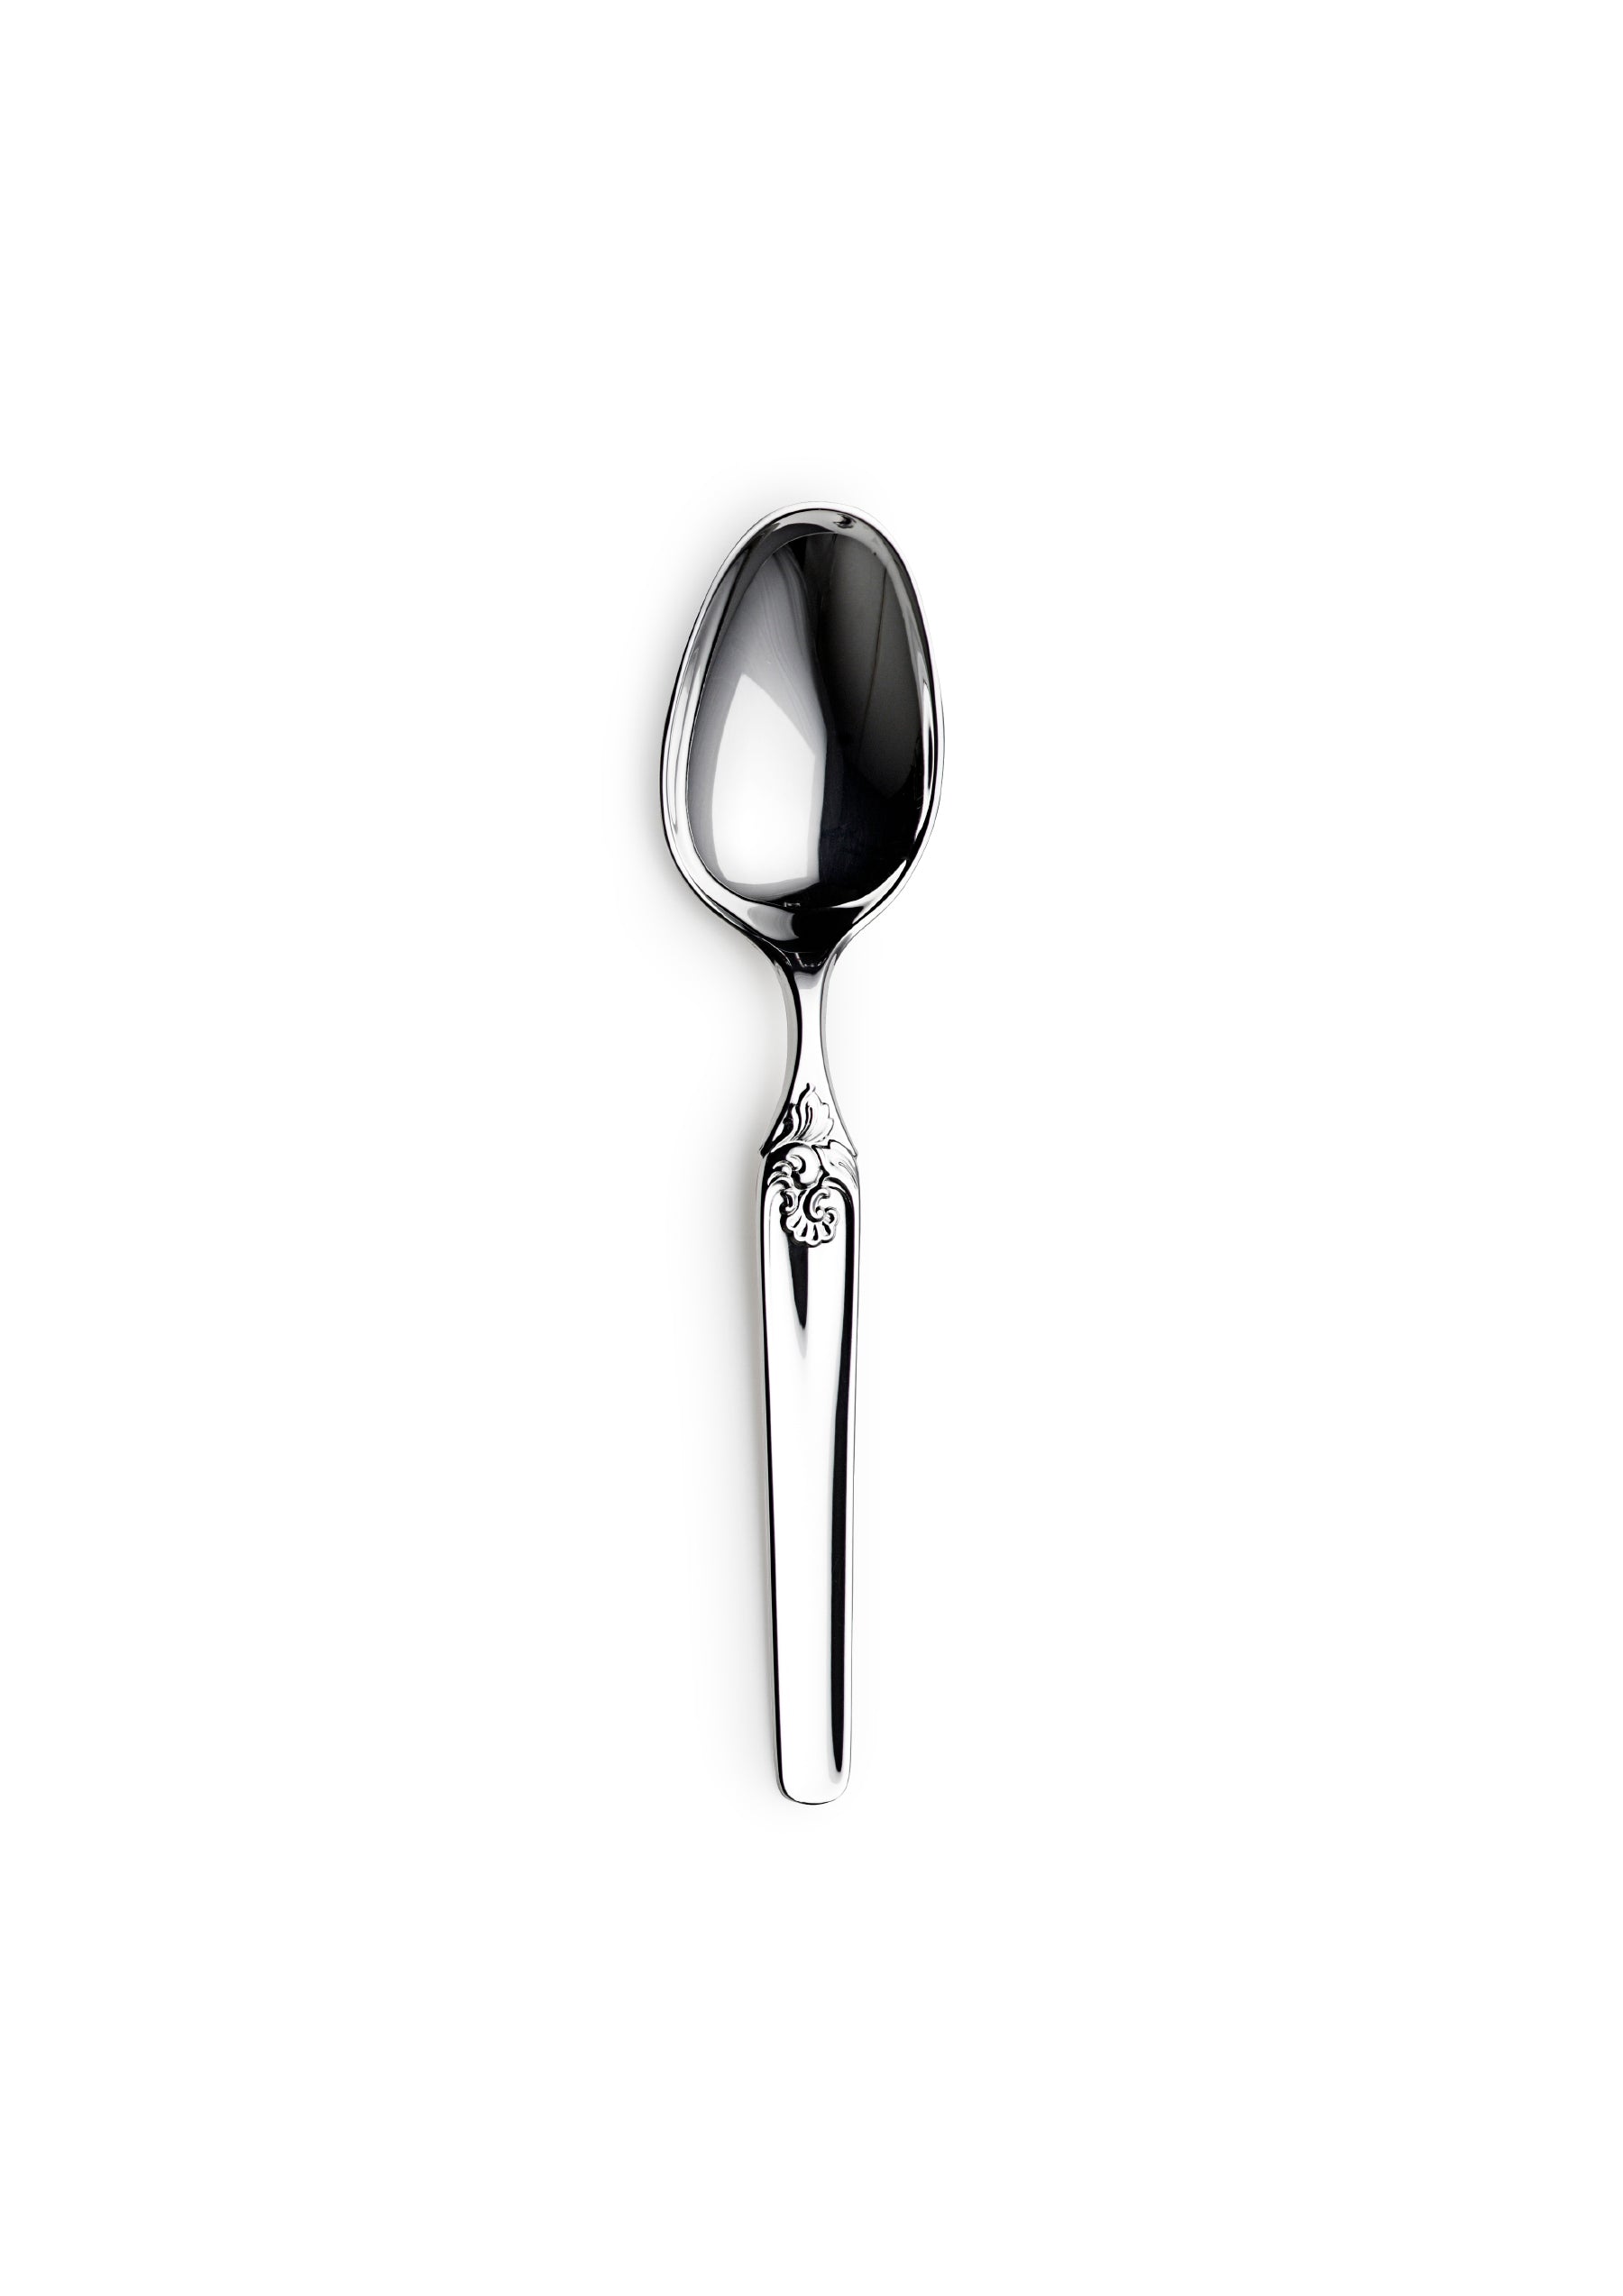 Elisabeth child/ice cream spoon 